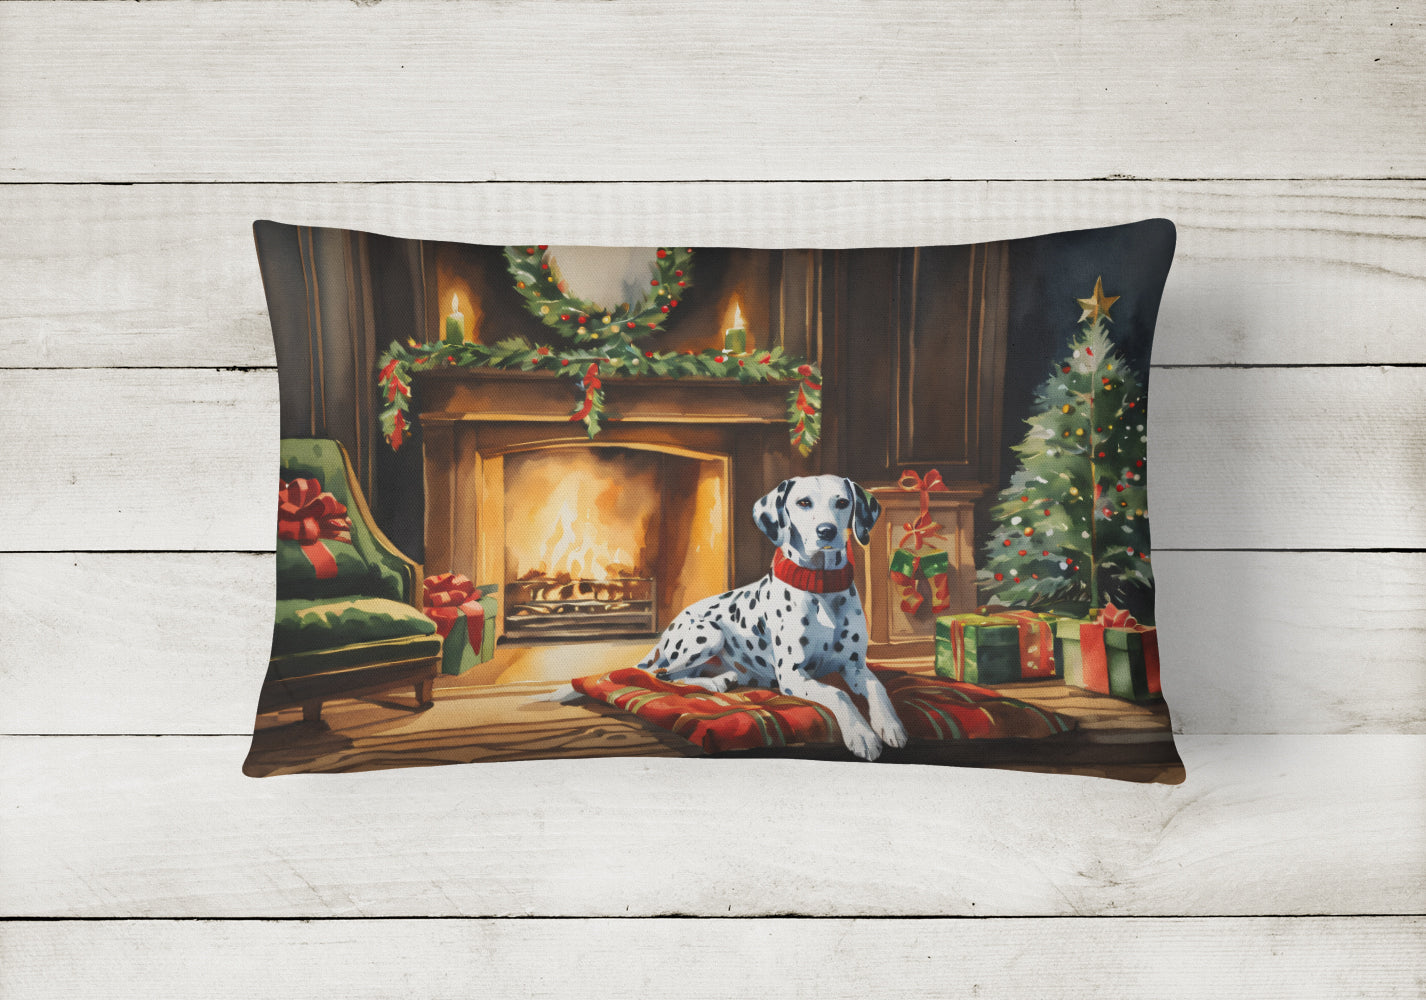 Buy this Dalmatian Cozy Christmas Throw Pillow